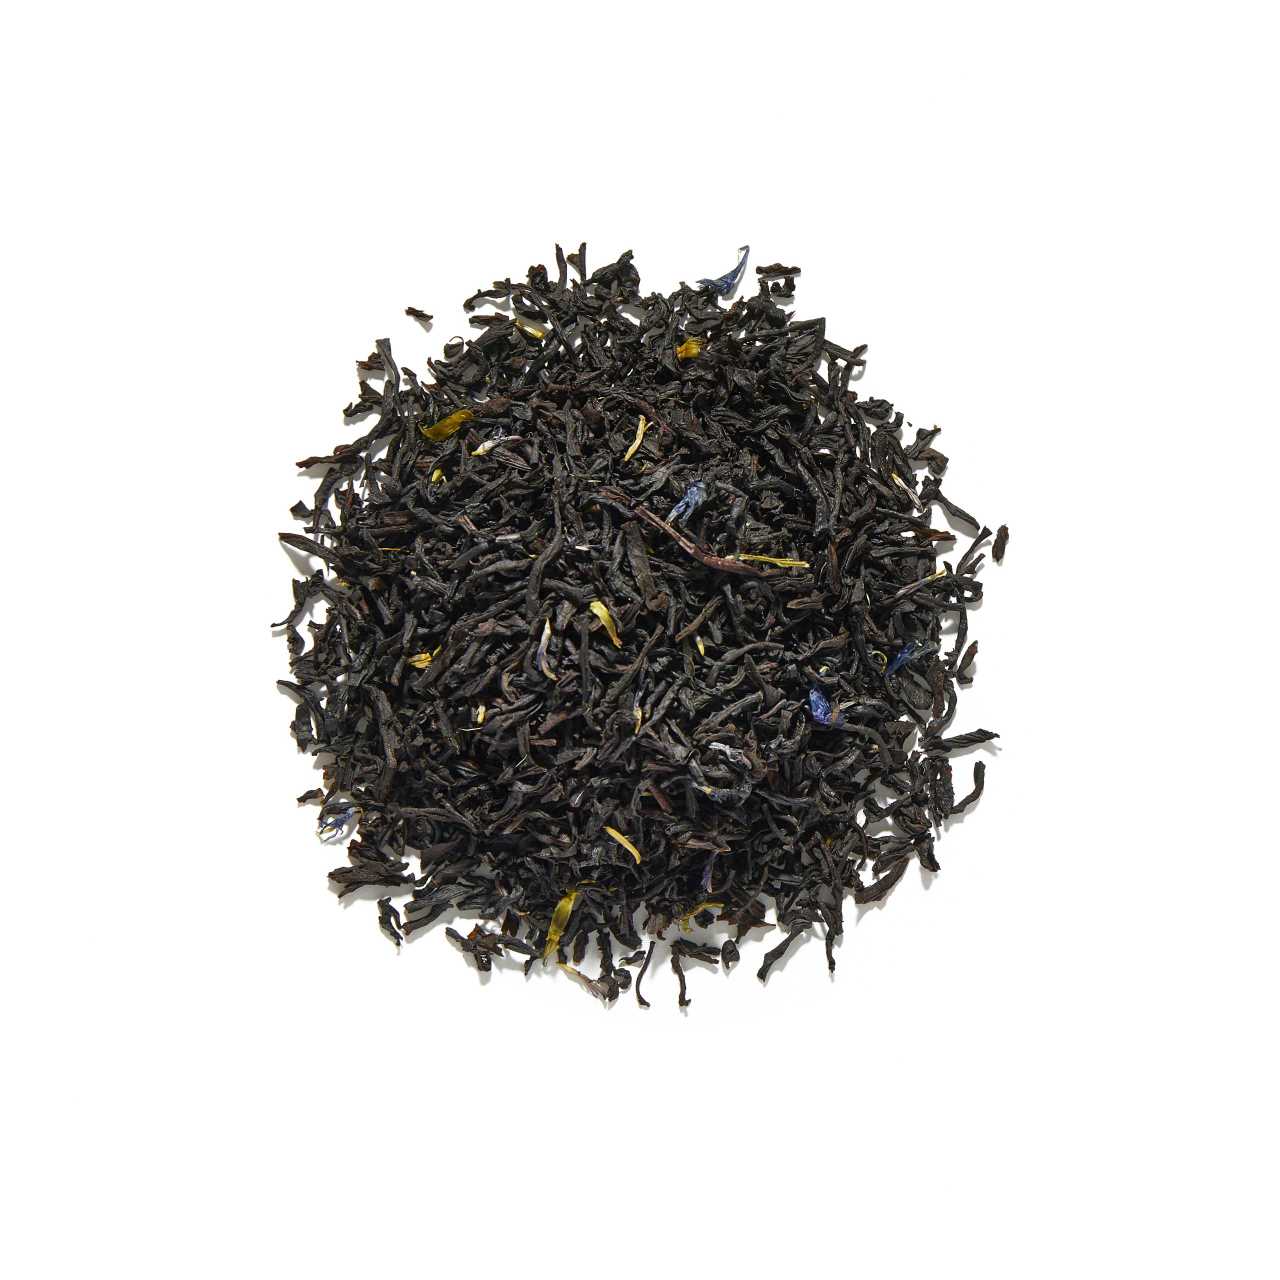 Supreme Earl Grey Loose Leaf Tea arranged in a circle